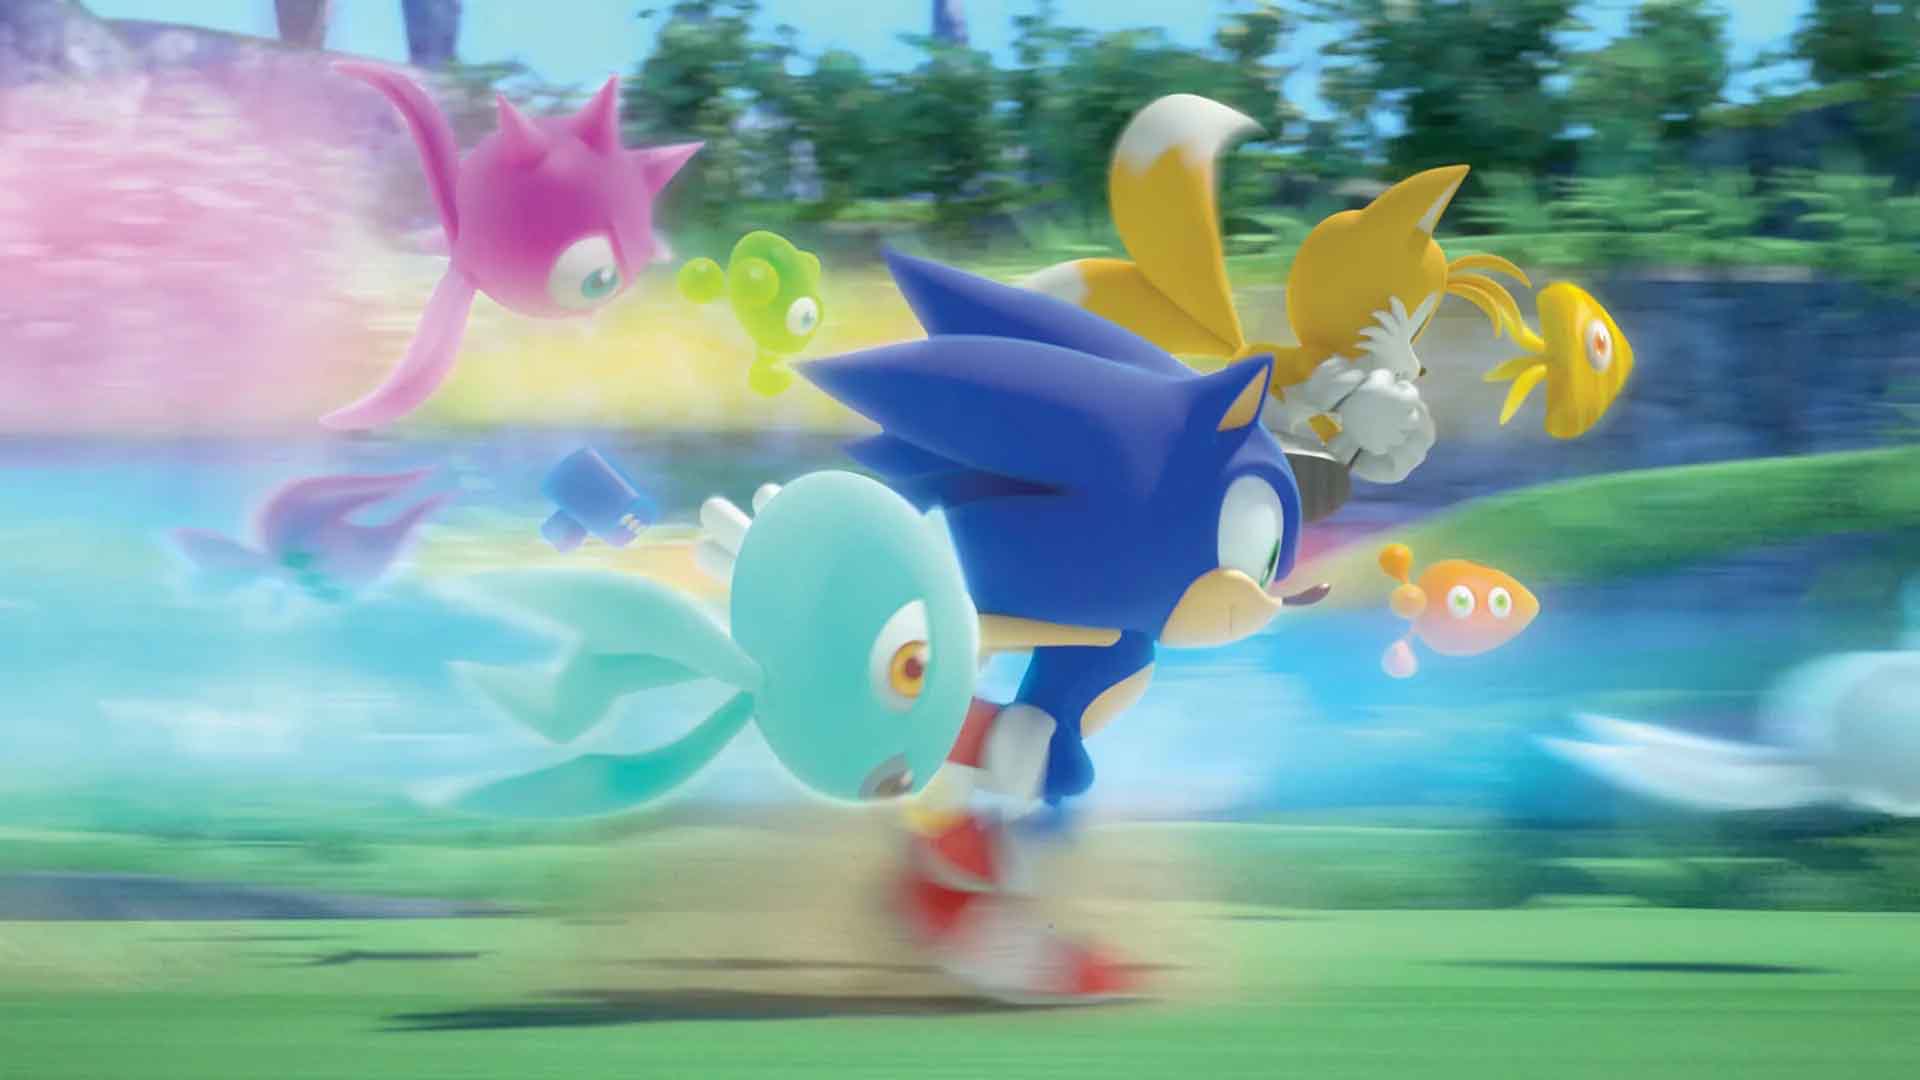 Sonic Colors Ultimate Graphics Comparison + Load Times (Wii vs